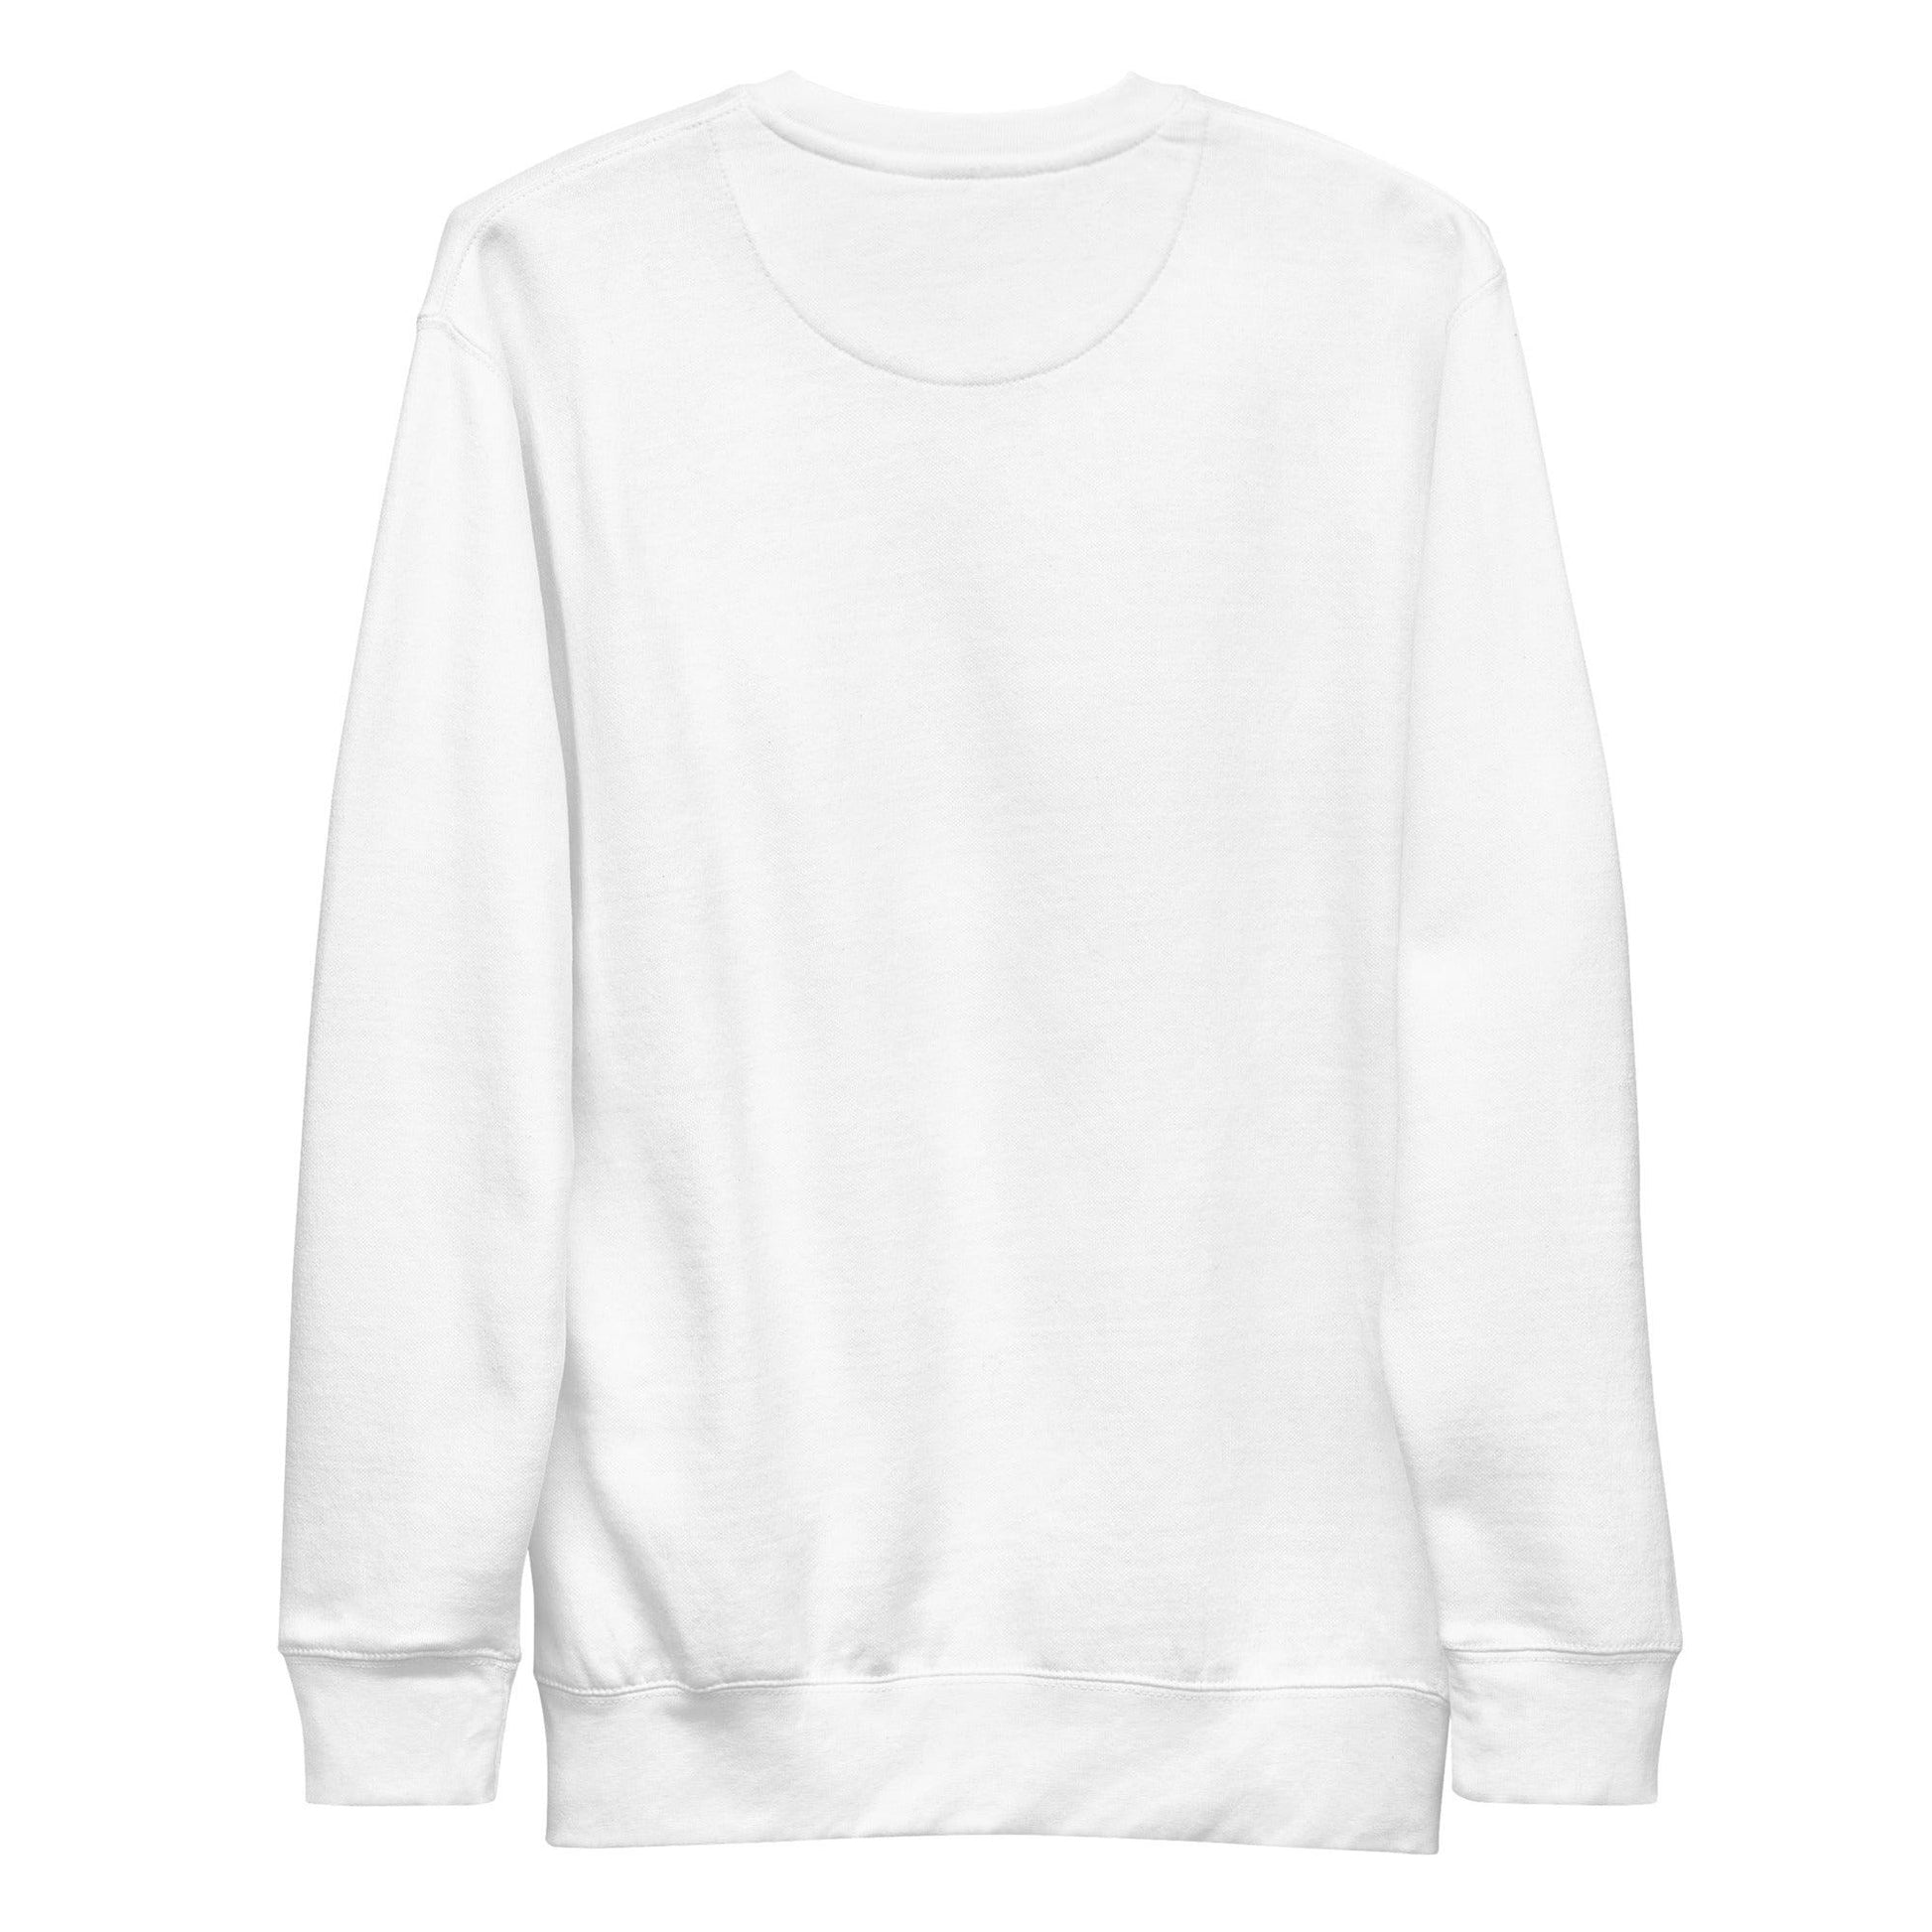 Unisex Premium Sweatshirt Game Over - Canvazon